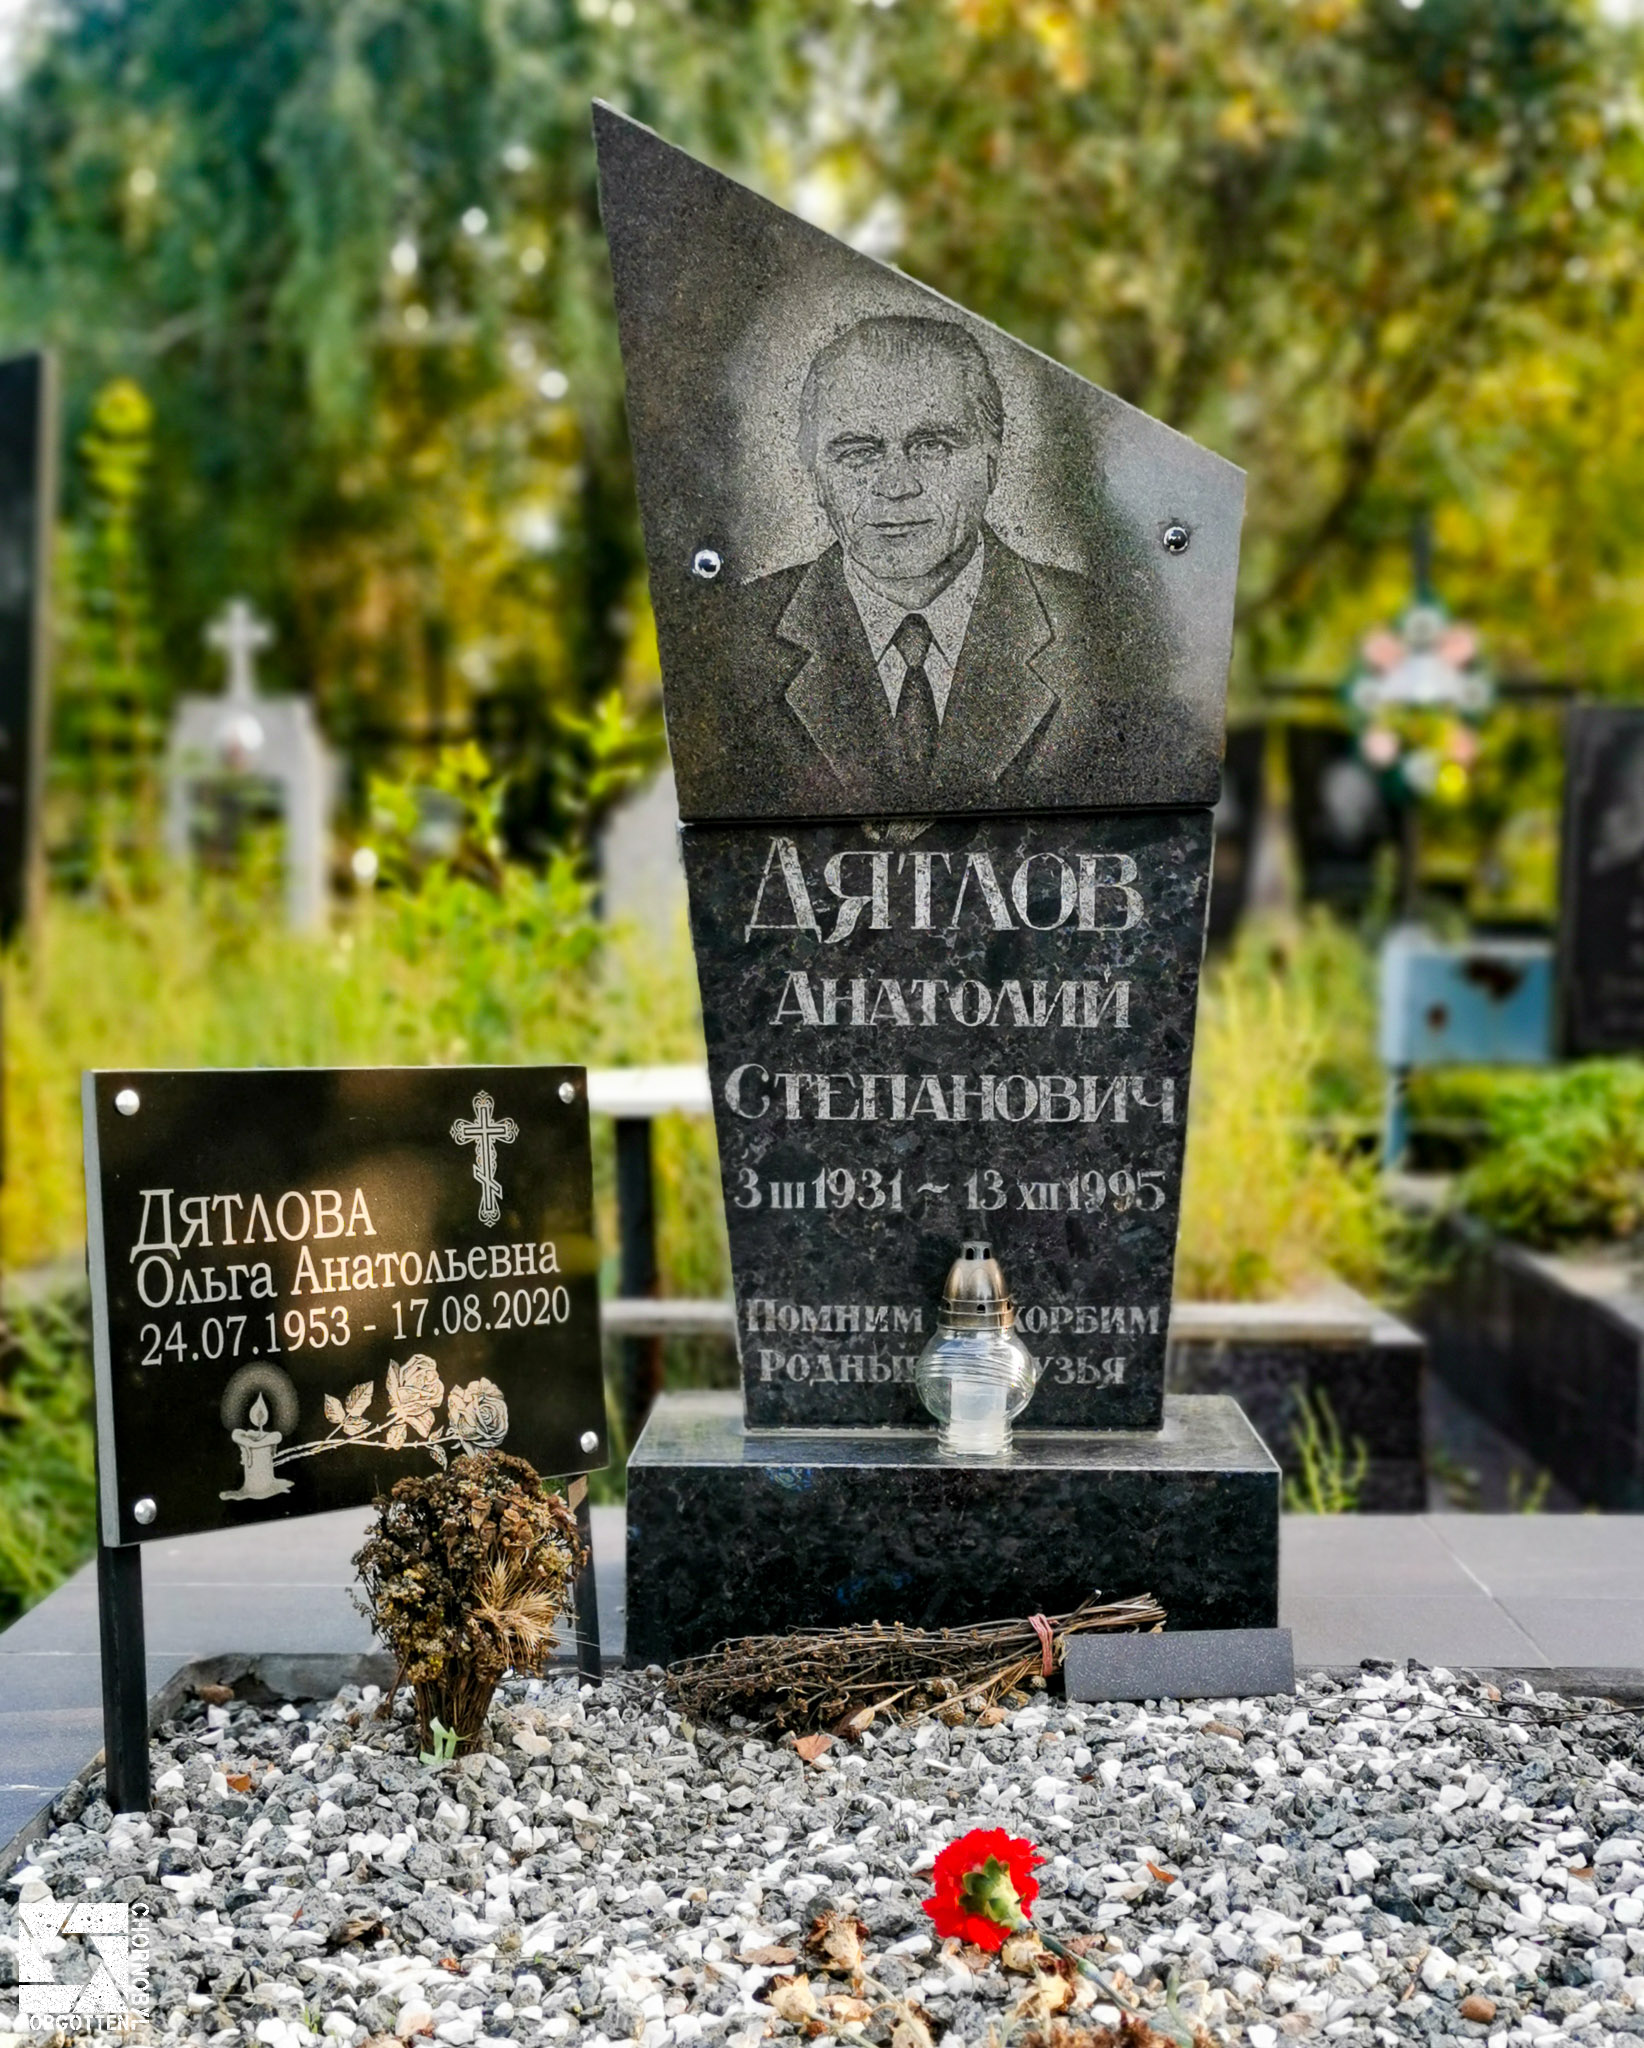 Anatoly Dyatlov's Grave in Kyiv